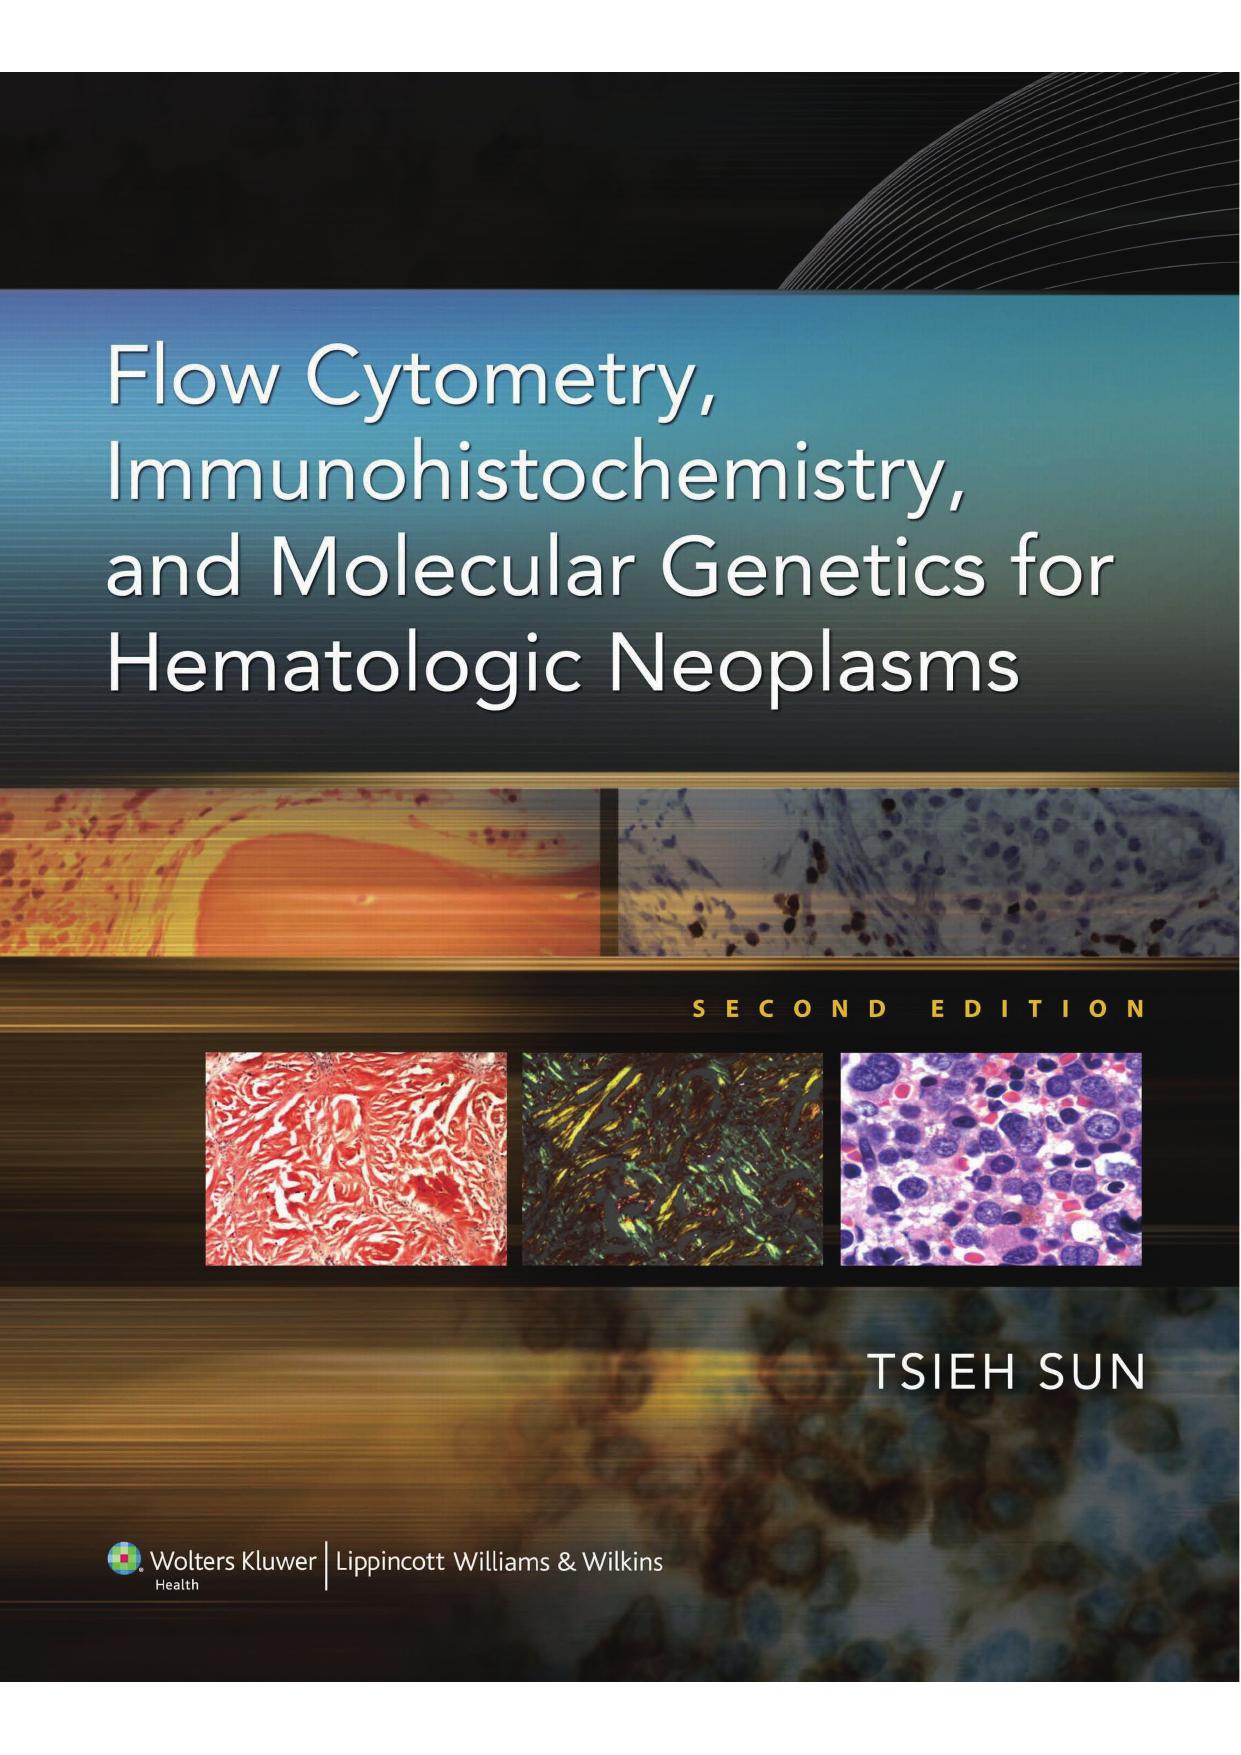 Flow Cytometry, Immunohistochemistry, and Molecular Genetics for Hematologic Neoplasms.jpg